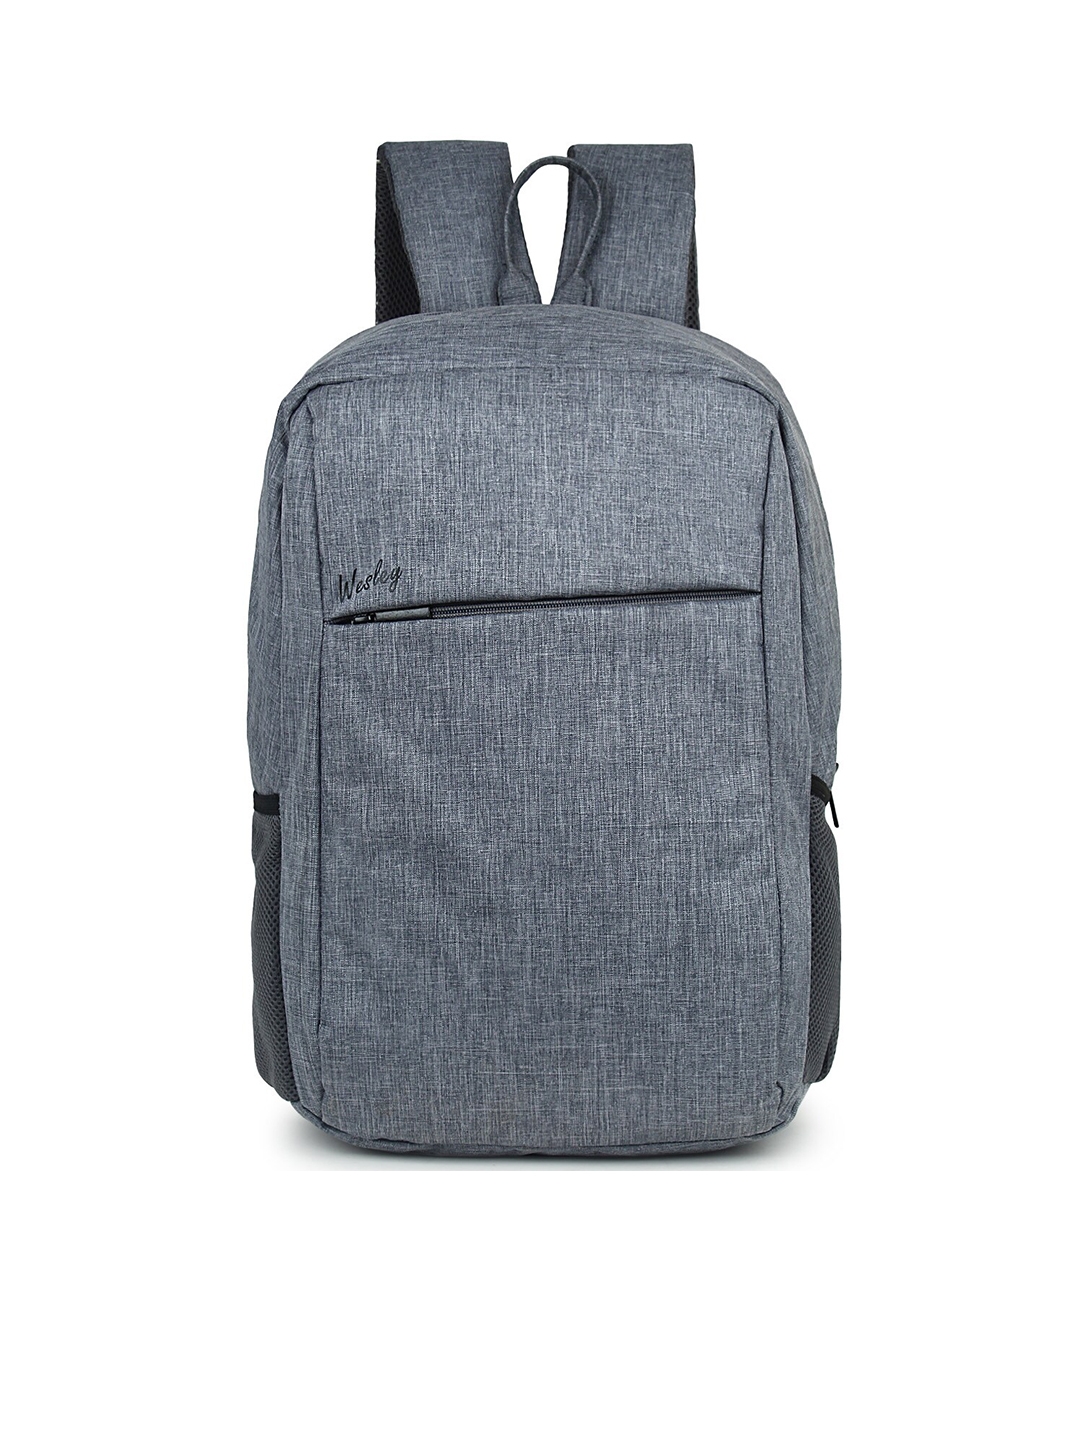 Wesley Unisex Solid Grey Laptop Backpack  15.6 inch